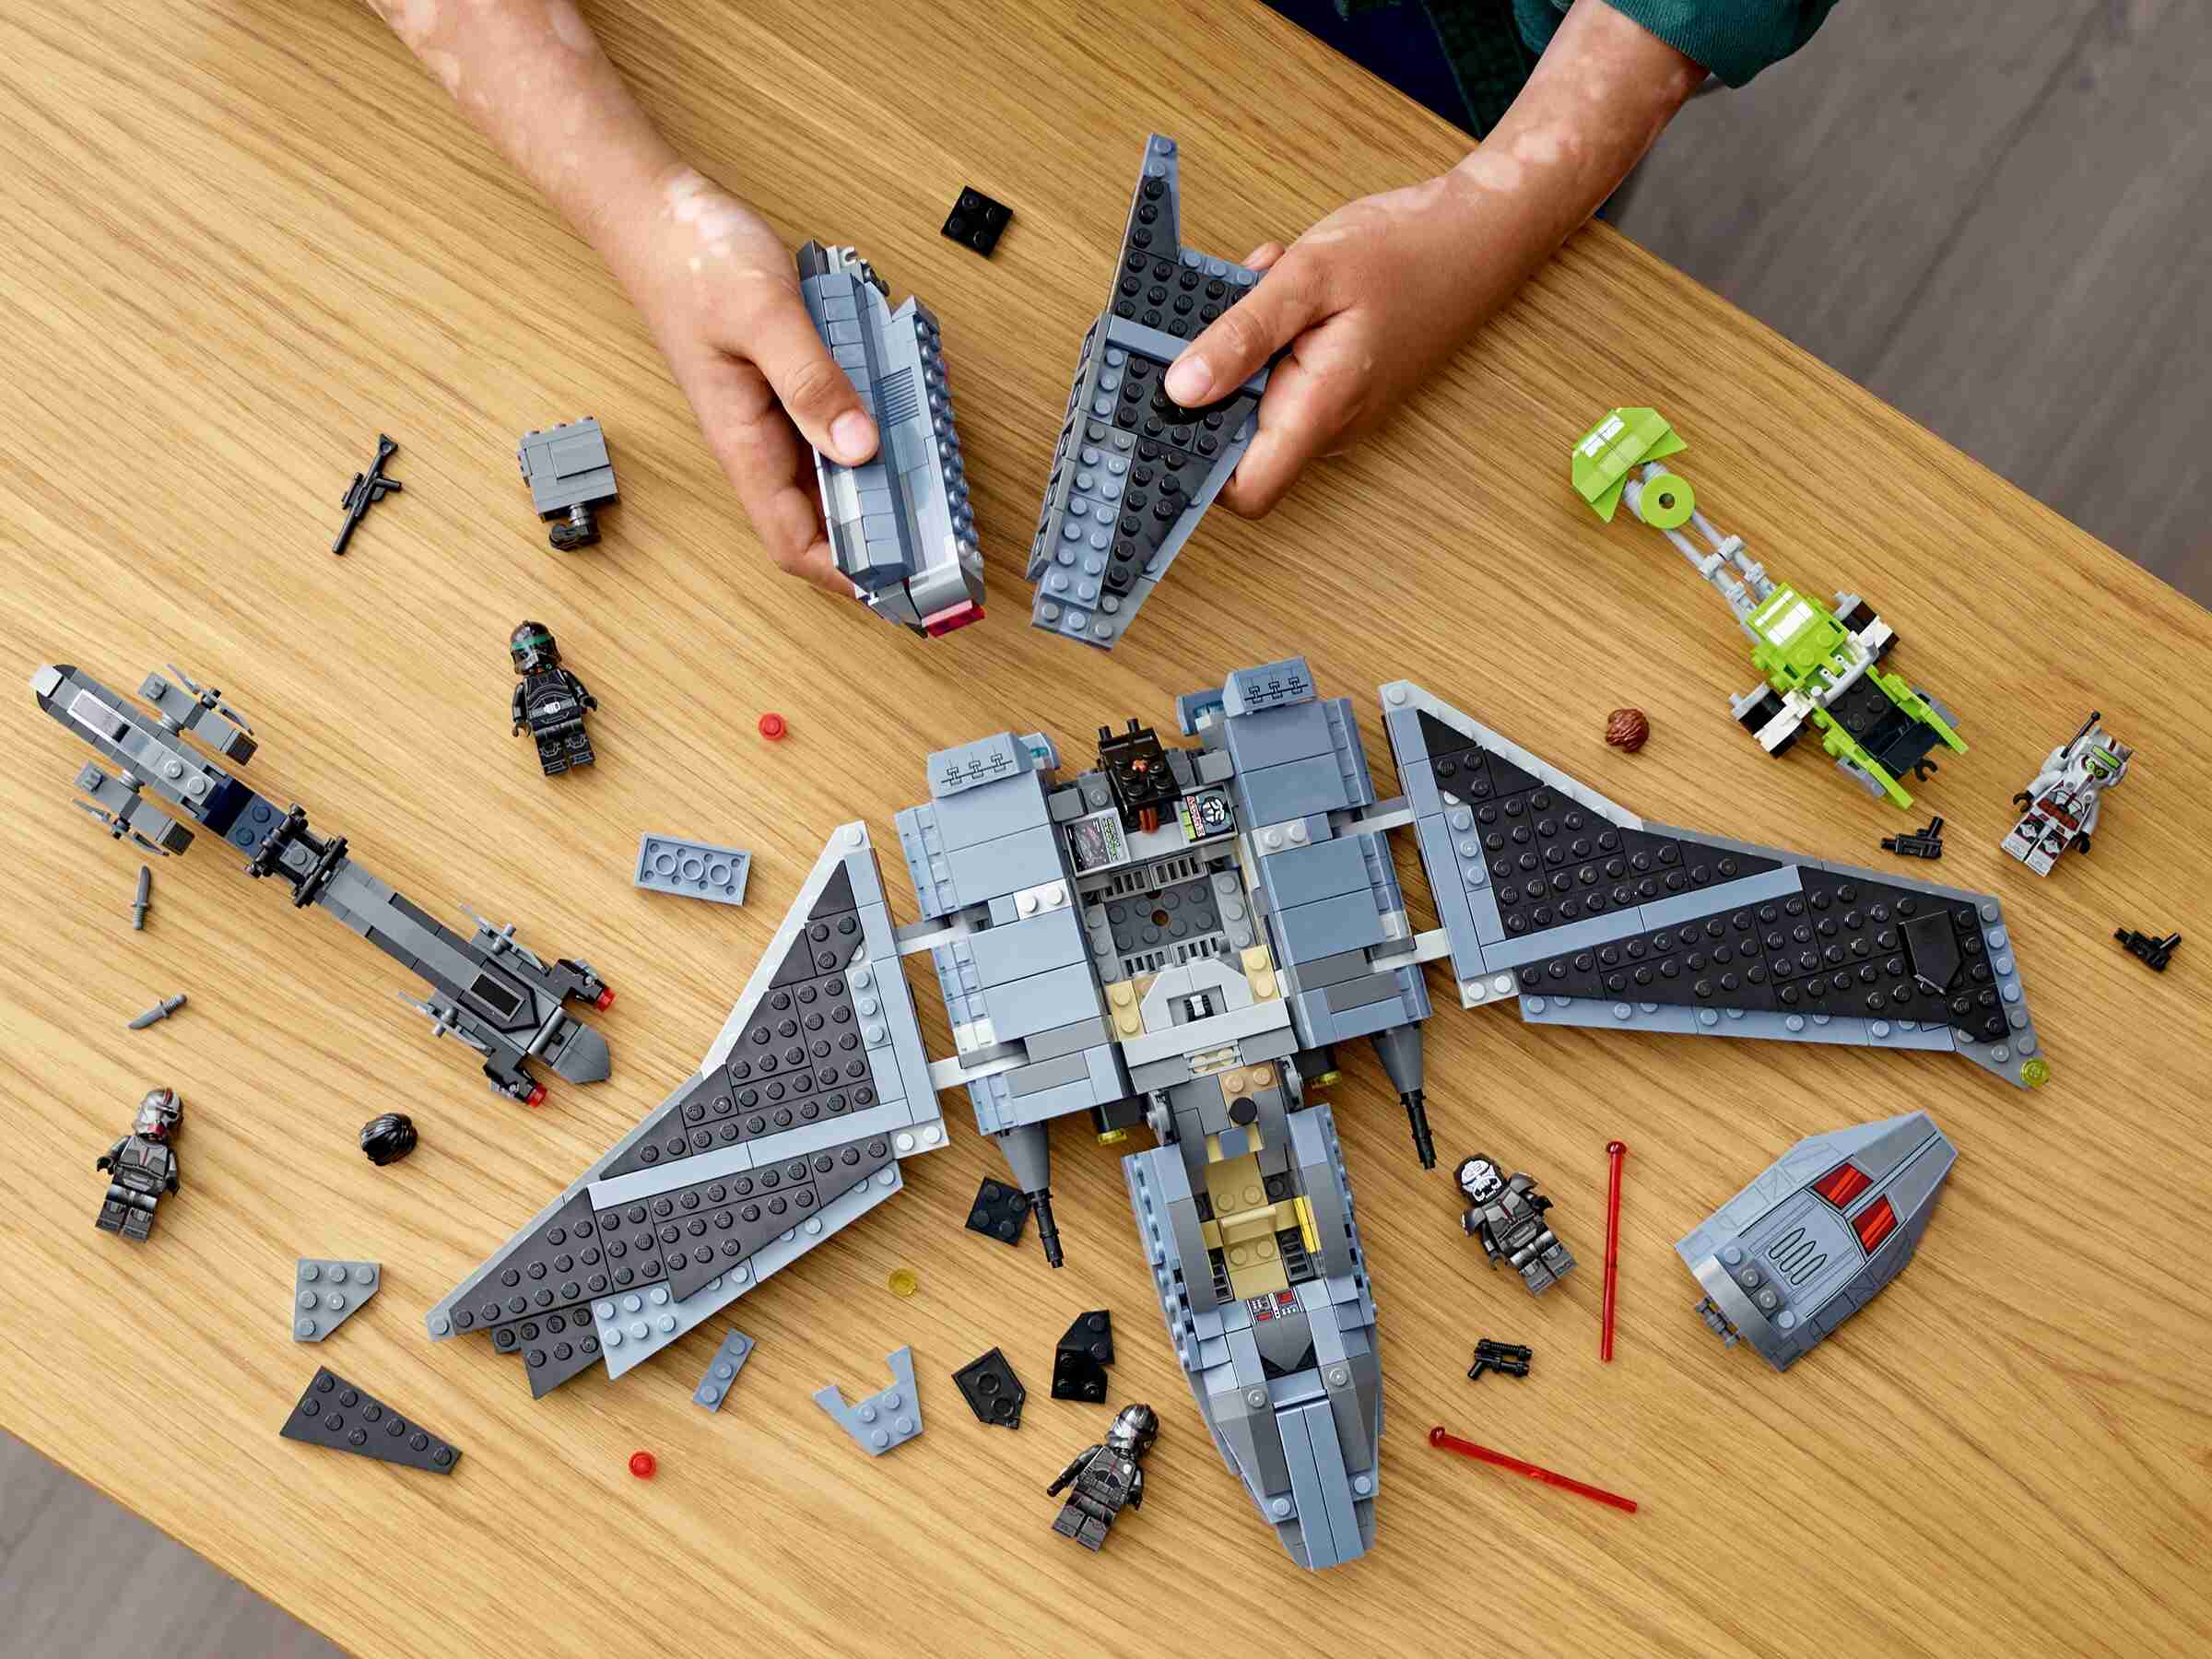 LEGO 75314 Star Wars Angriffsshuttle aus The Bad Batch, mit 5 Klon-Minifiguren